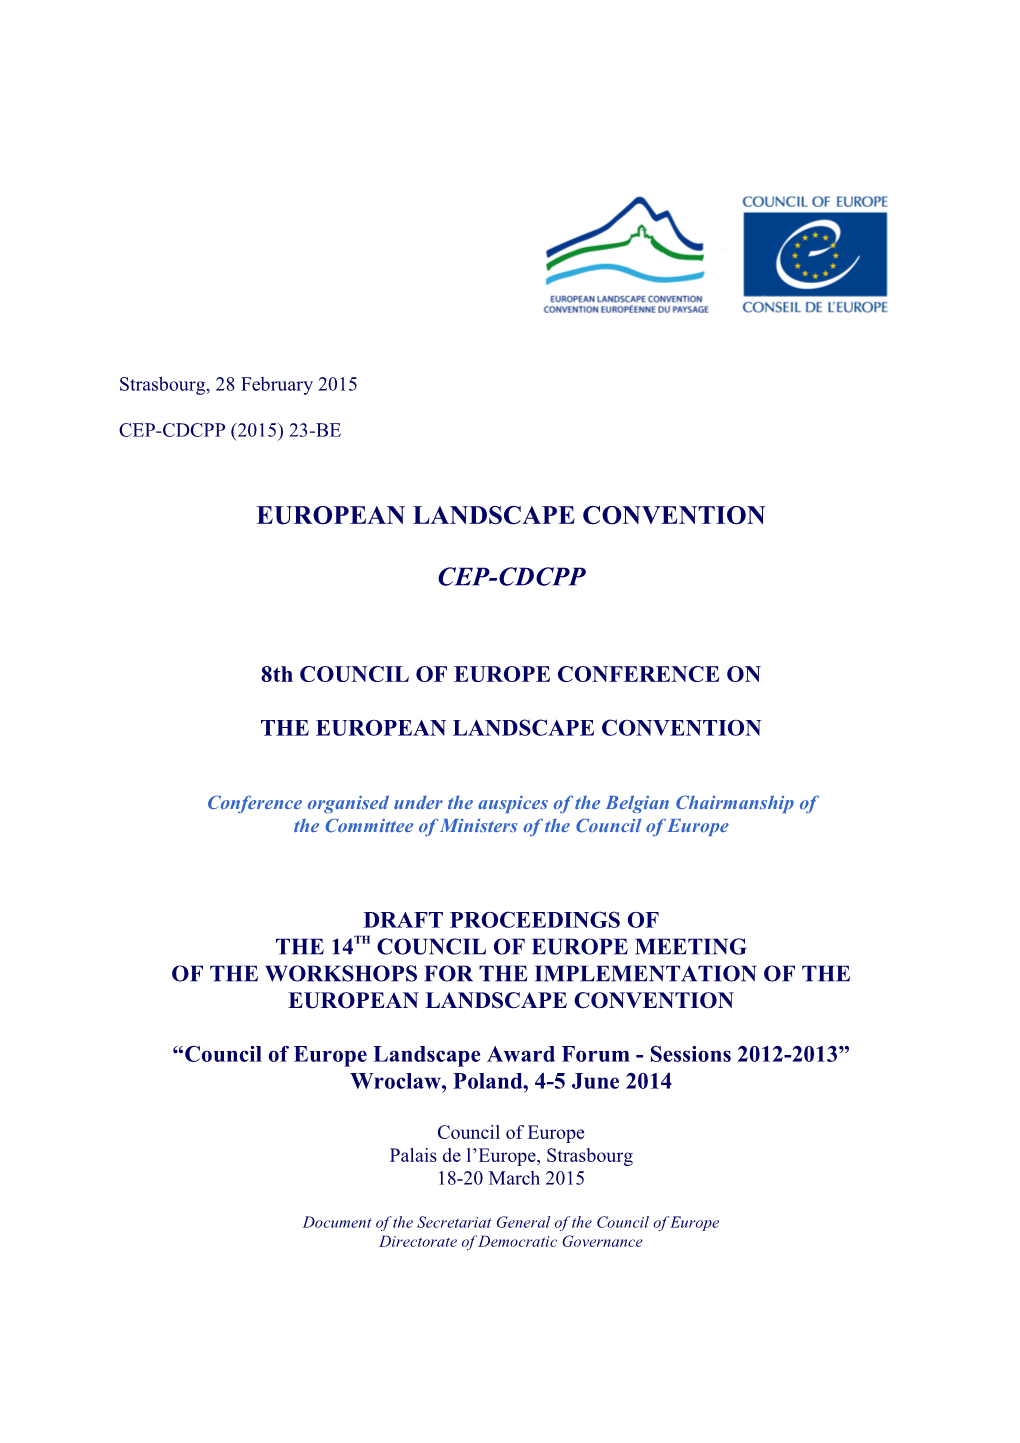 CEP-CDCPP (2015) 23-BE Wroclaw Draft Proceedings 2014